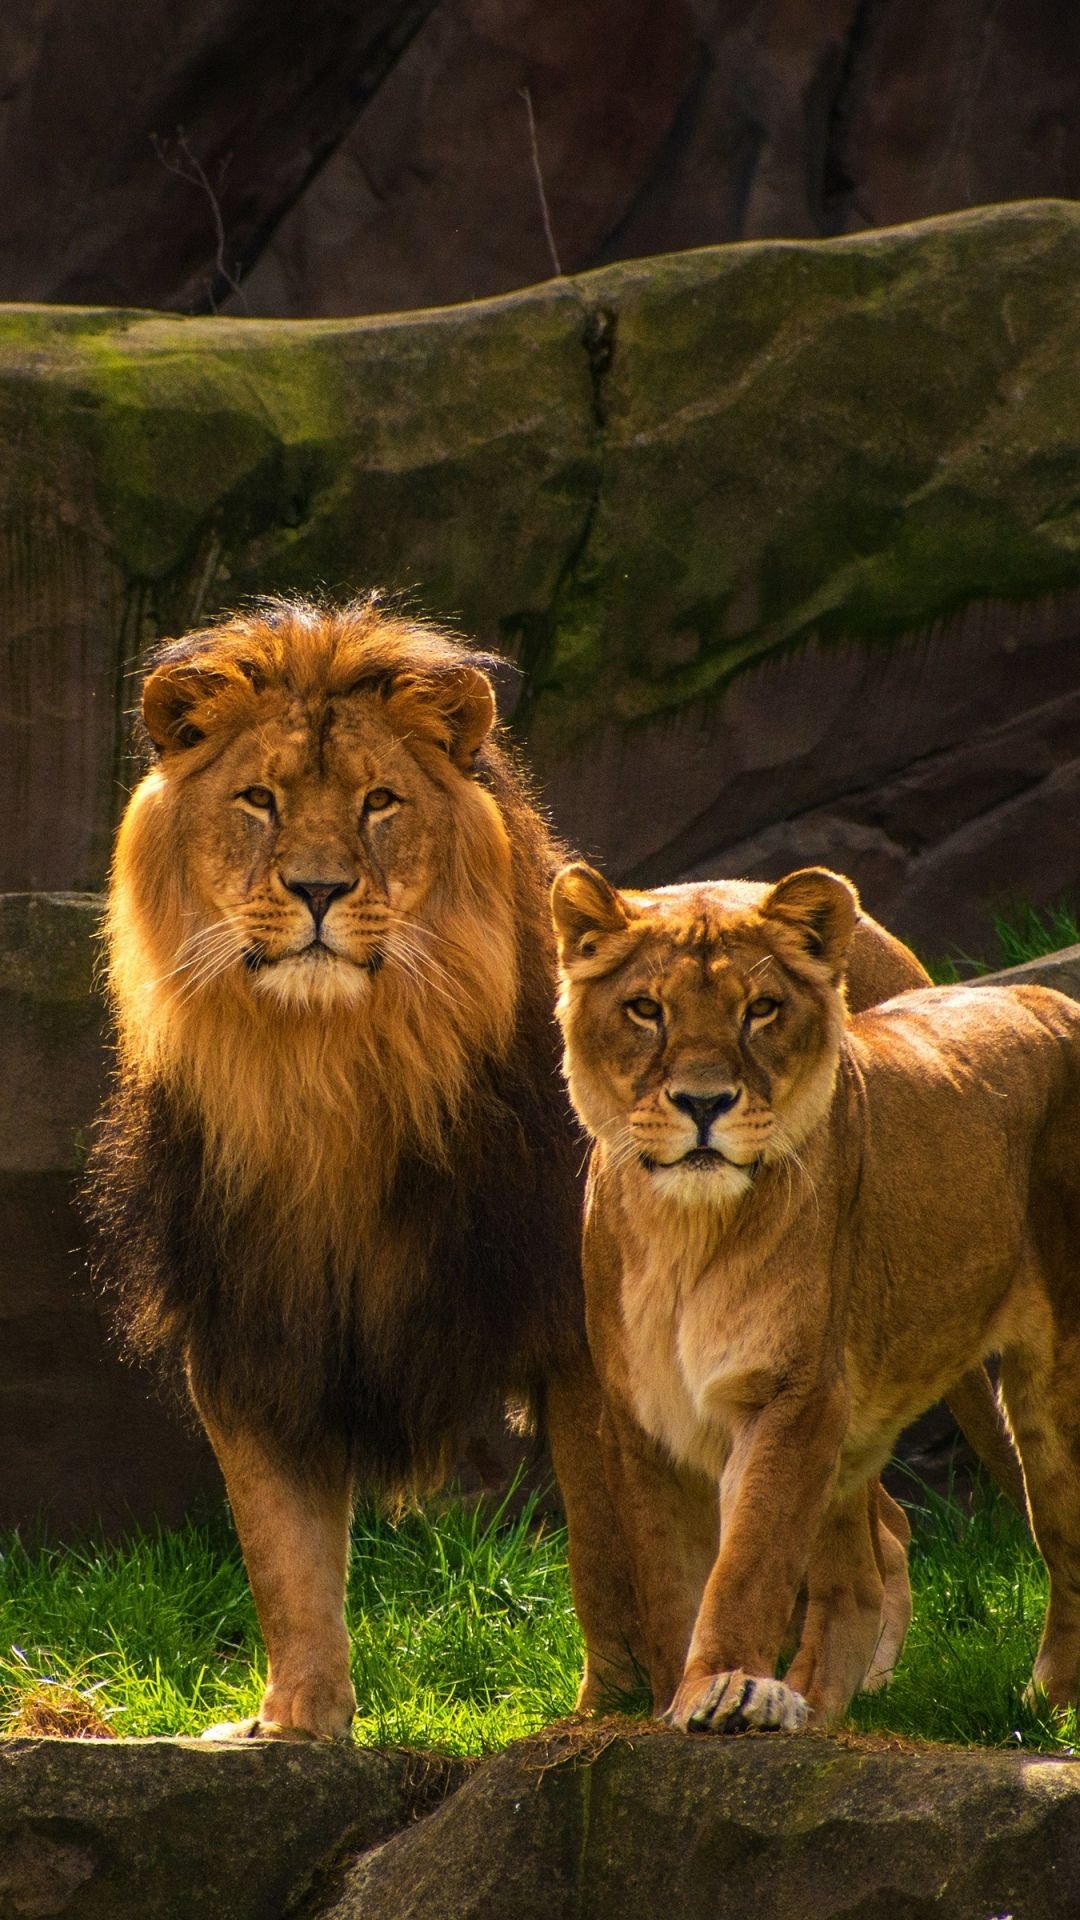 1,000+ Free Lioness & Lion Images - Pixabay